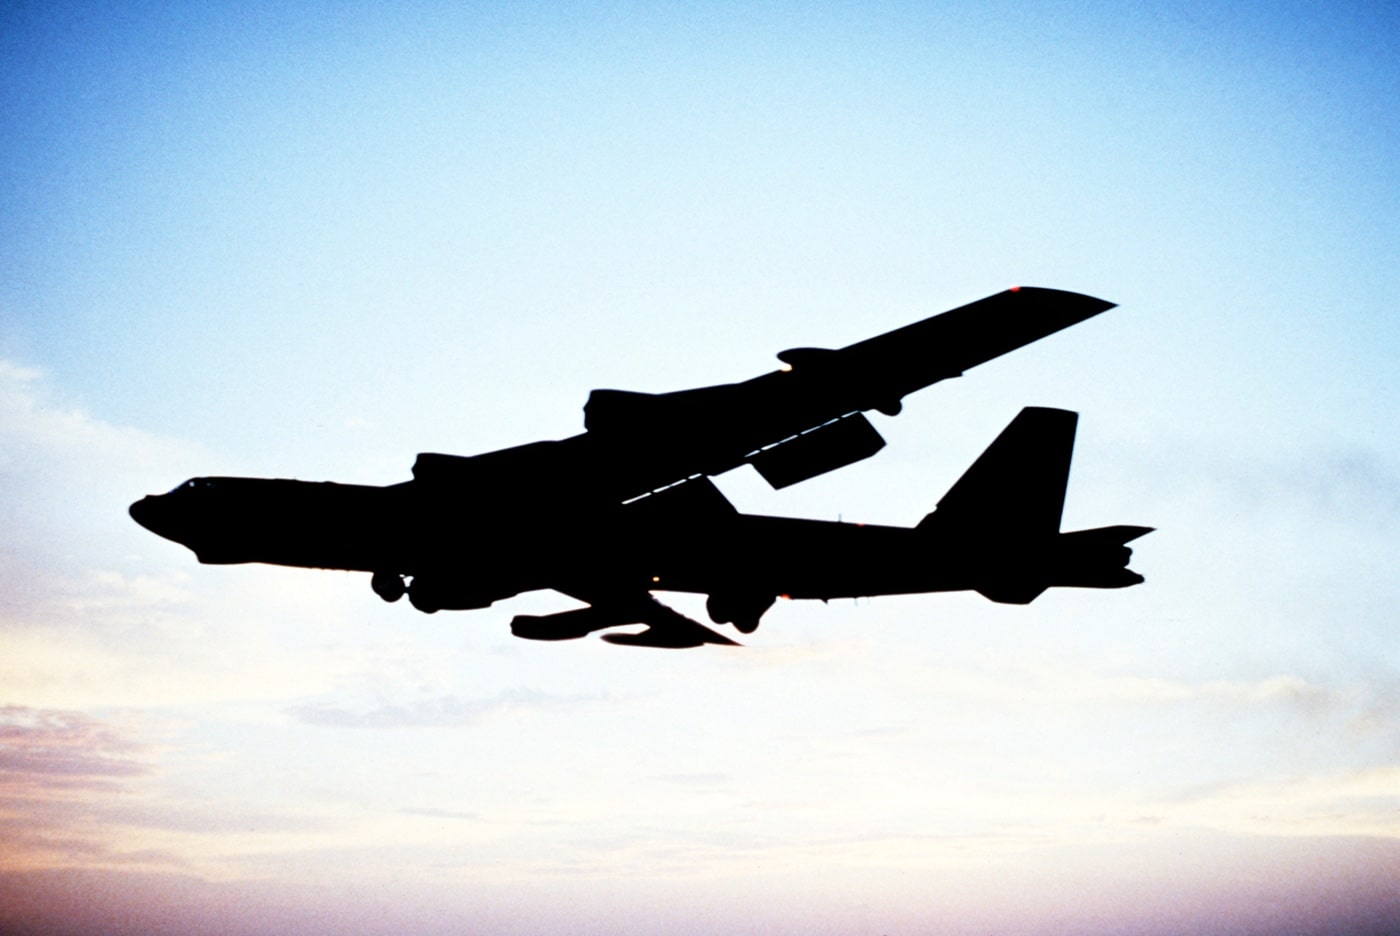 b-52 silhouette sky